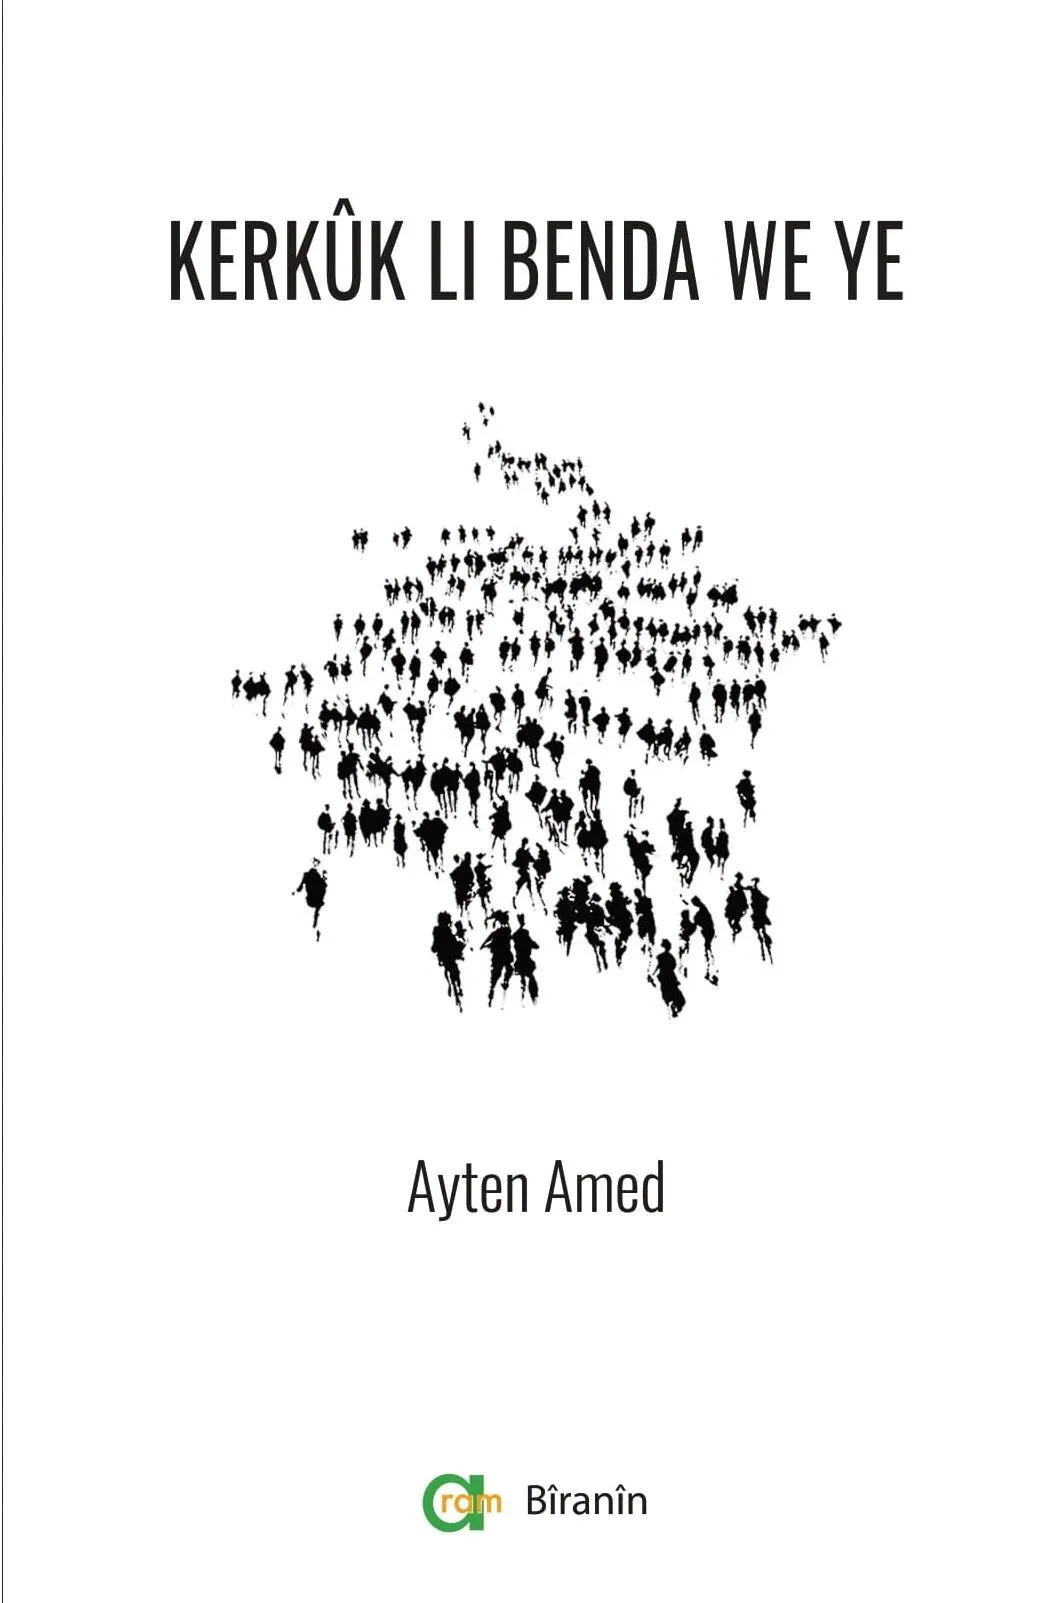 Ayten Amed – Kerkuk Li Benda We Ye